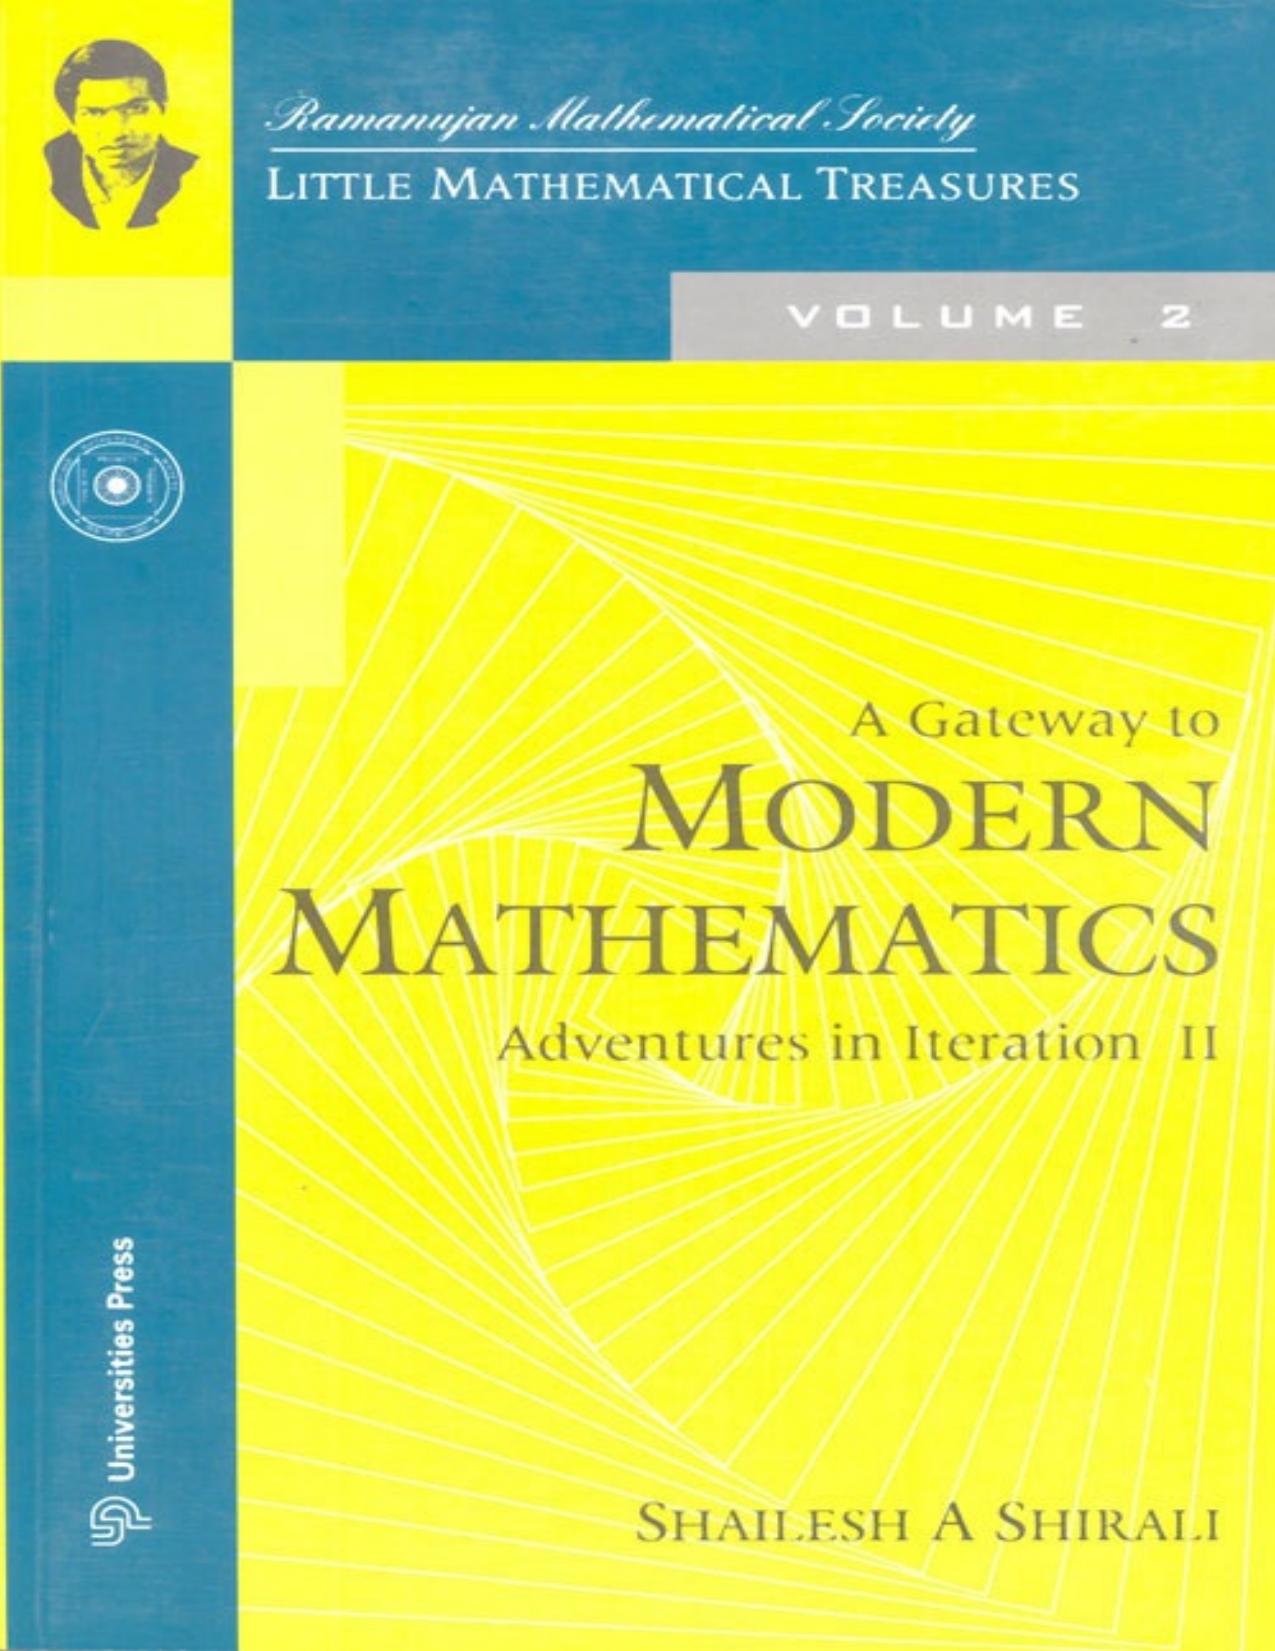 A Gateway to Modern Mathematics: Adverntures in Iteration II